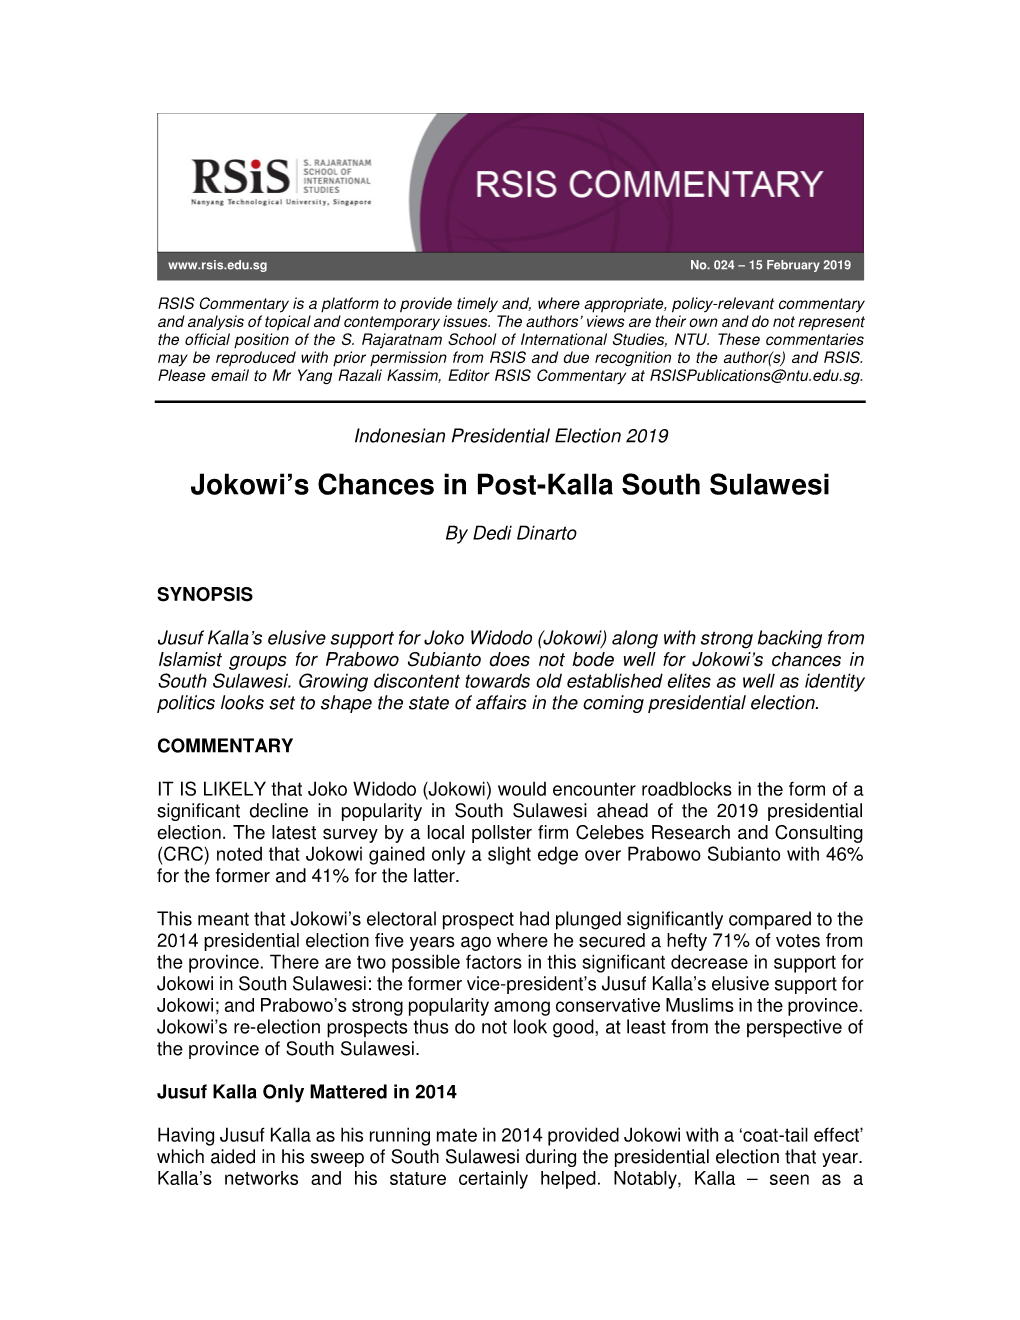 Jokowi's Chances in Post-Kalla South Sulawesi